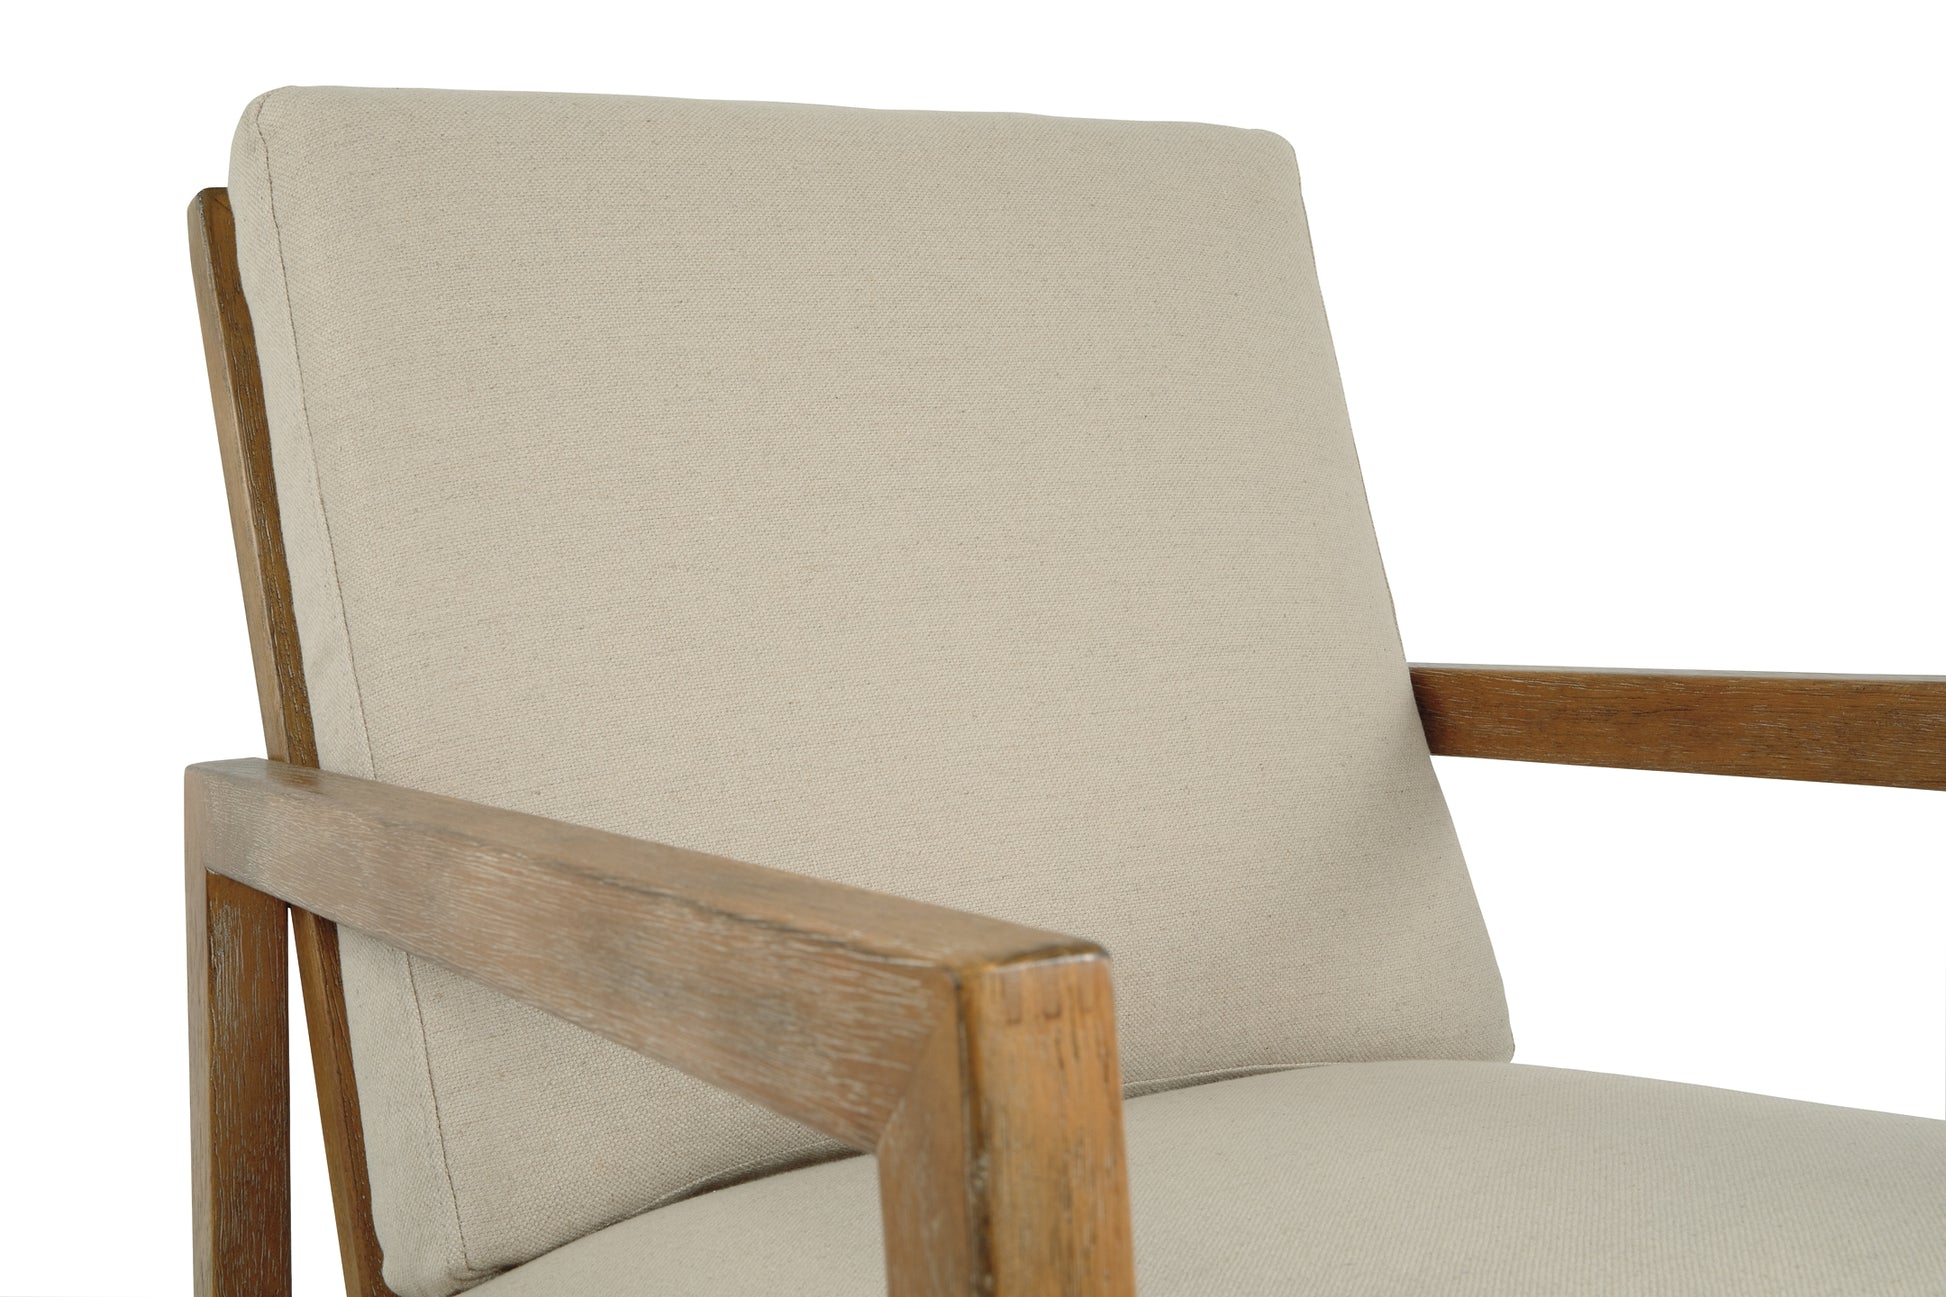 Novelda Accent Chair JB's Furniture  Home Furniture, Home Decor, Furniture Store